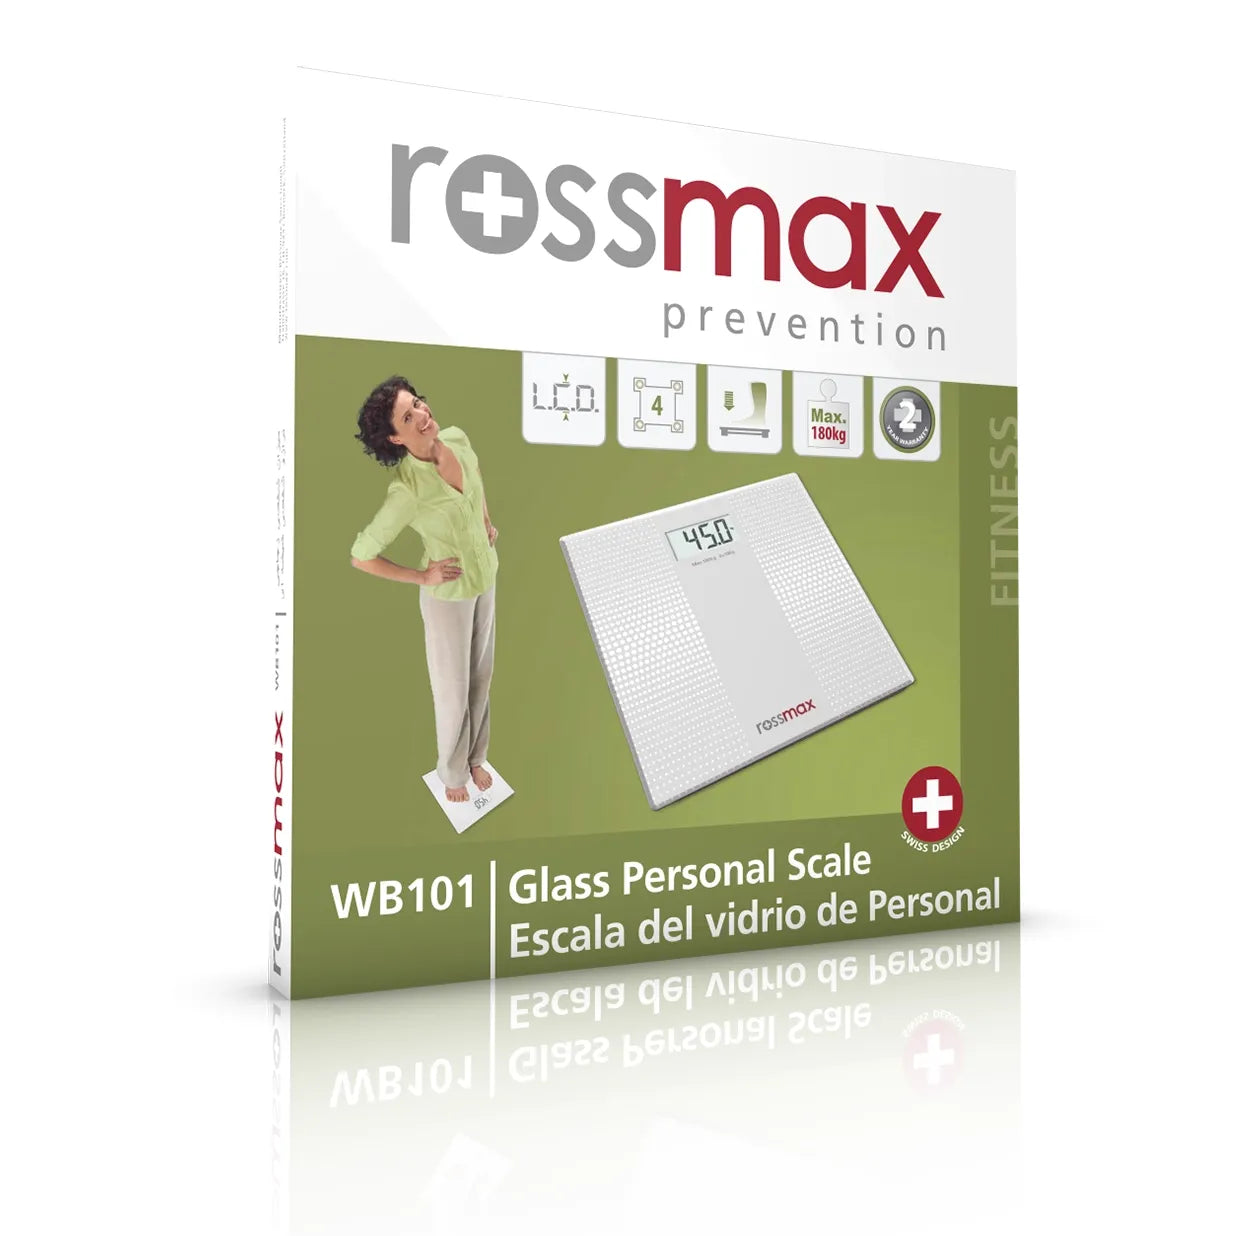 Rossmax Digital Weighing Scales